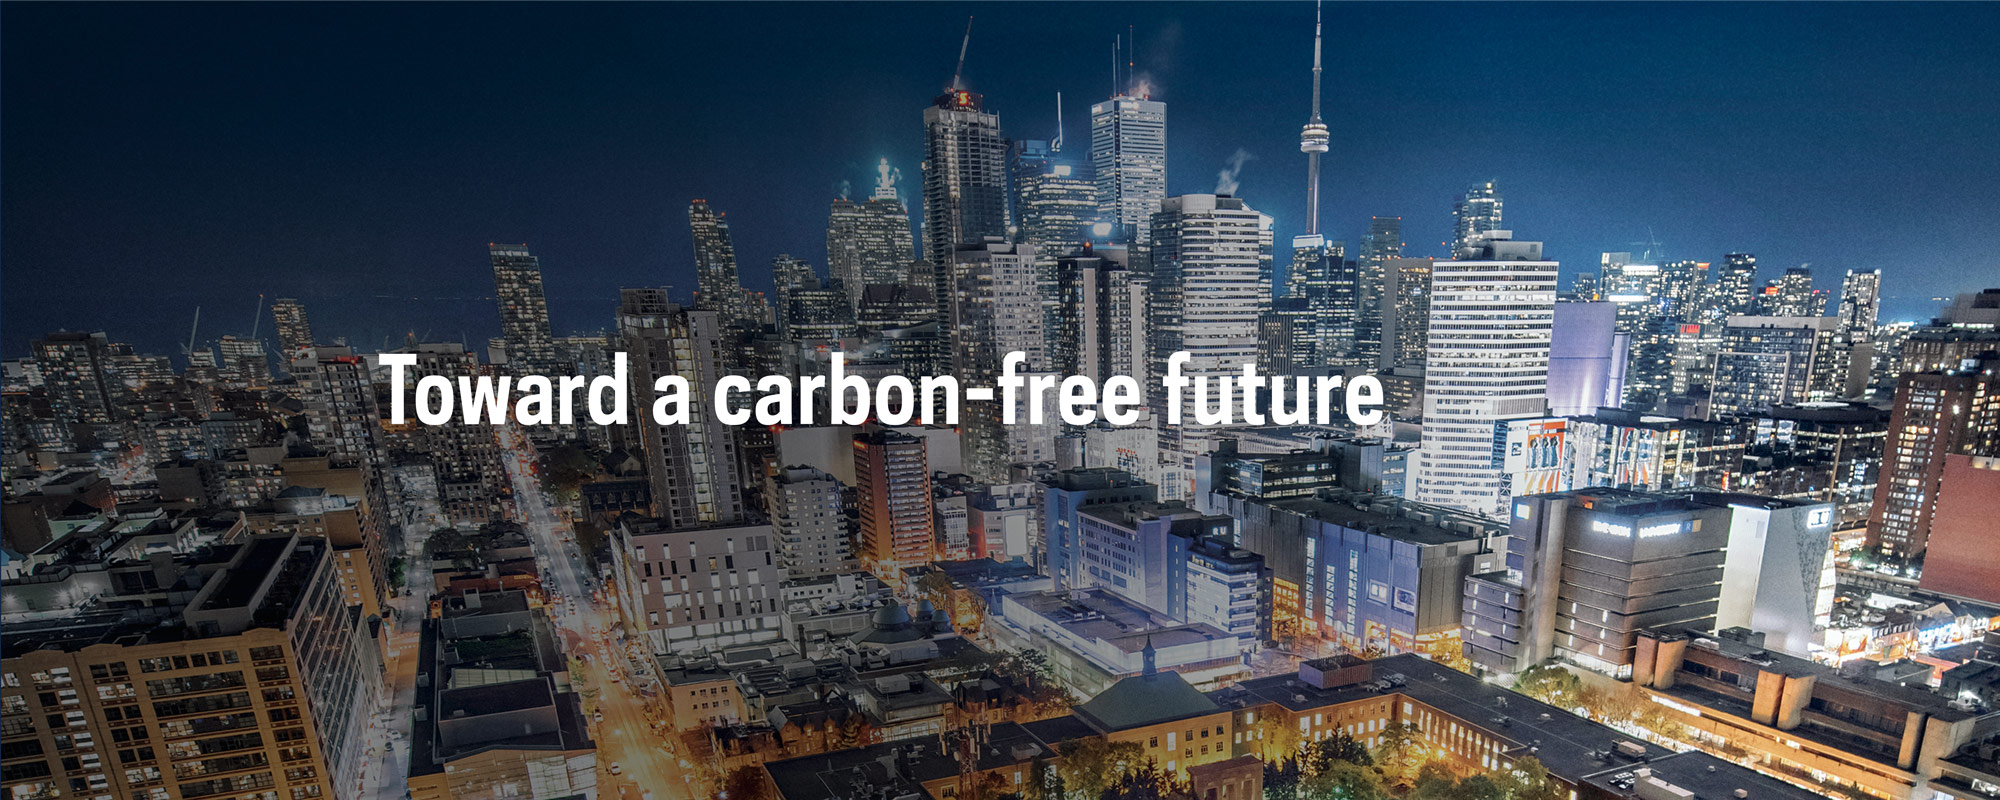 Toward a carbon-free future; Toronto cityline at night